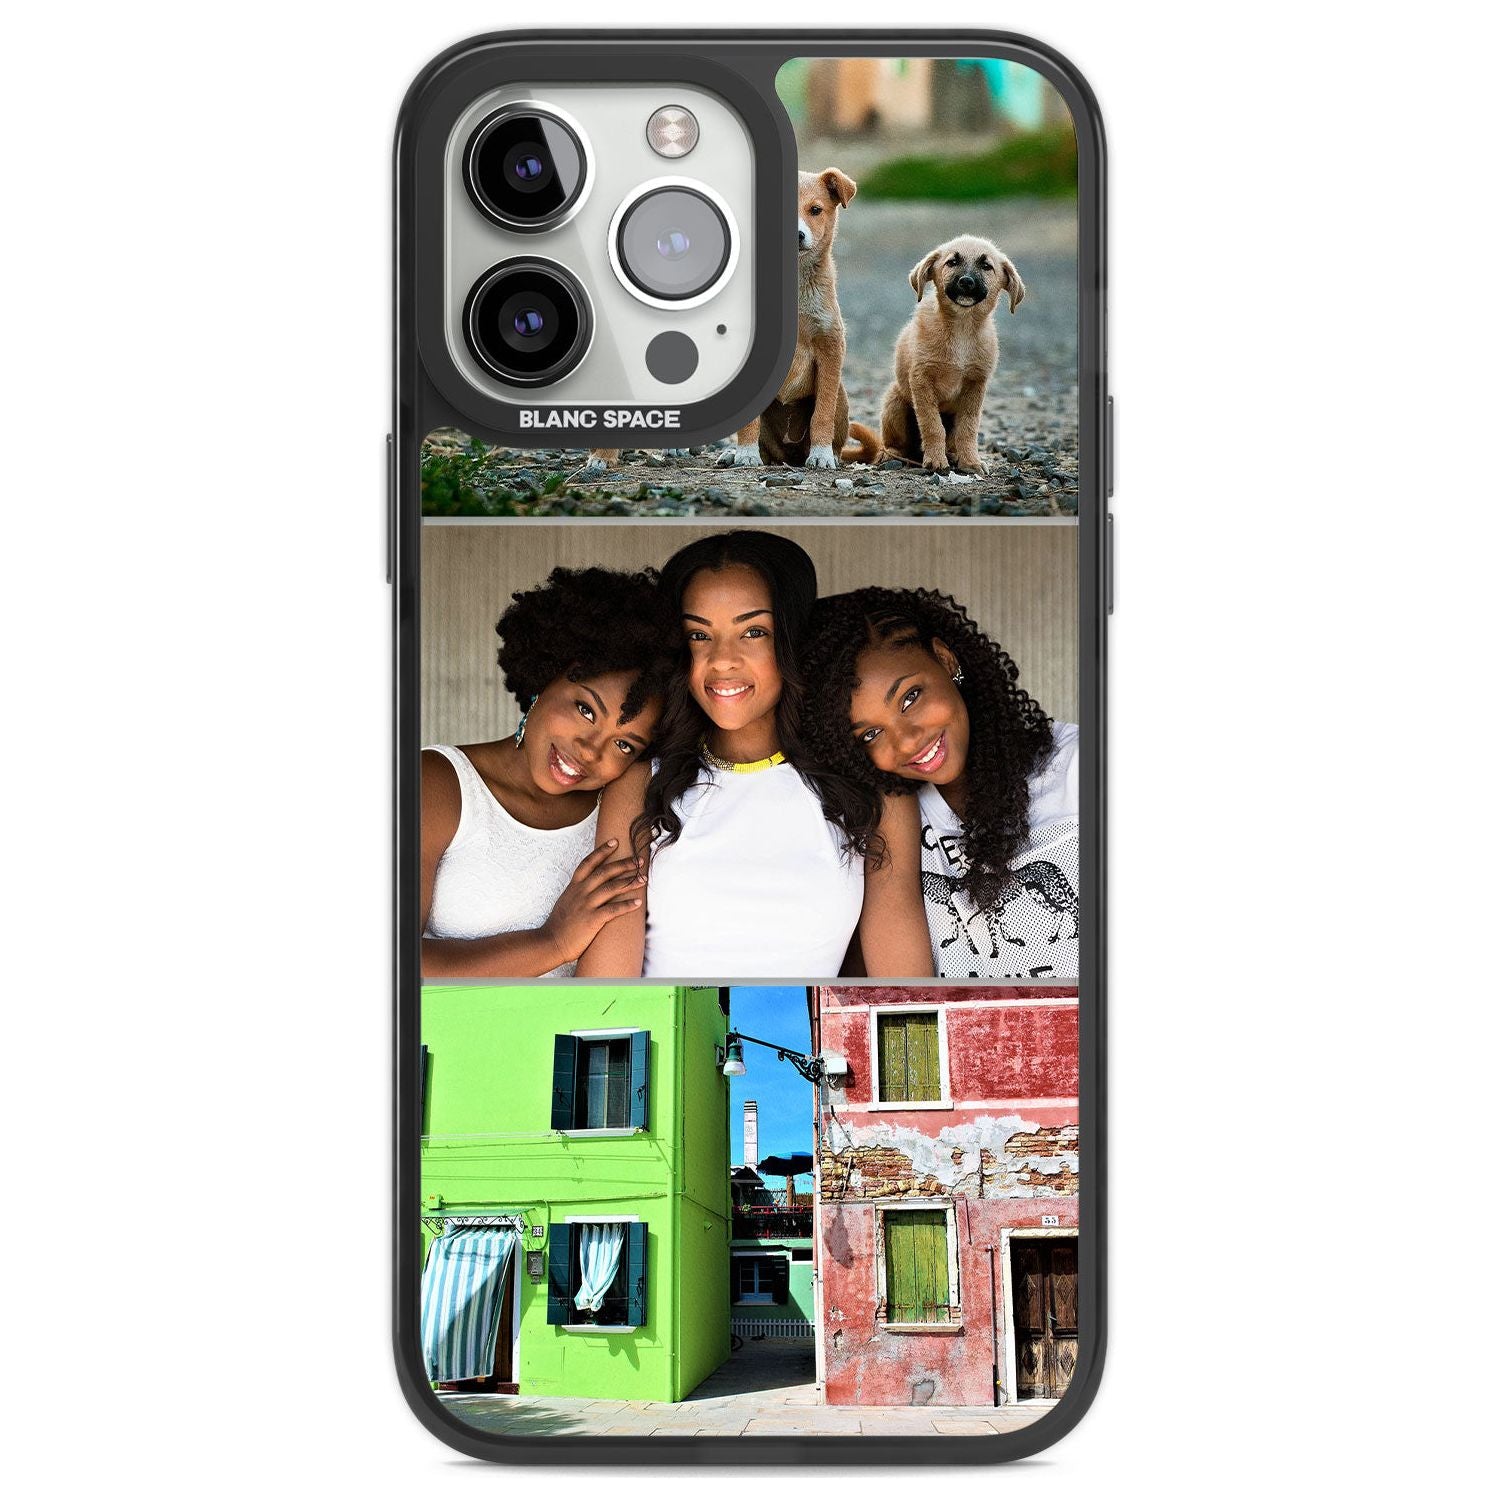 Personalised 3 Photo Grid Custom Phone Case iPhone 13 Pro Max / Black Impact Case,iPhone 14 Pro Max / Black Impact Case Blanc Space